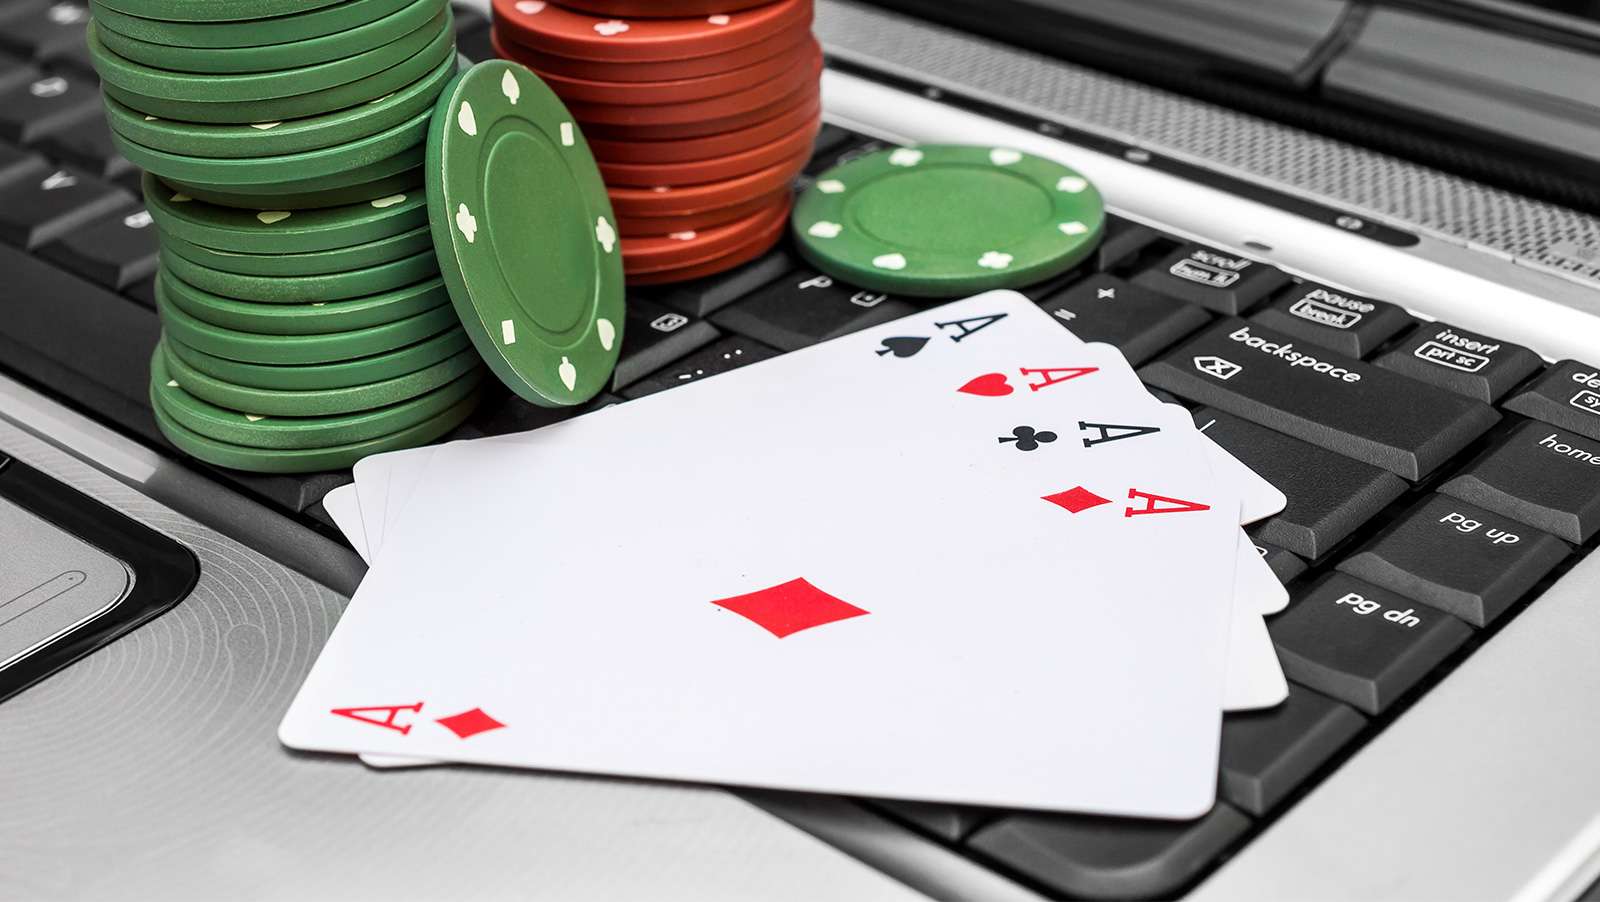 Get more money through online poker